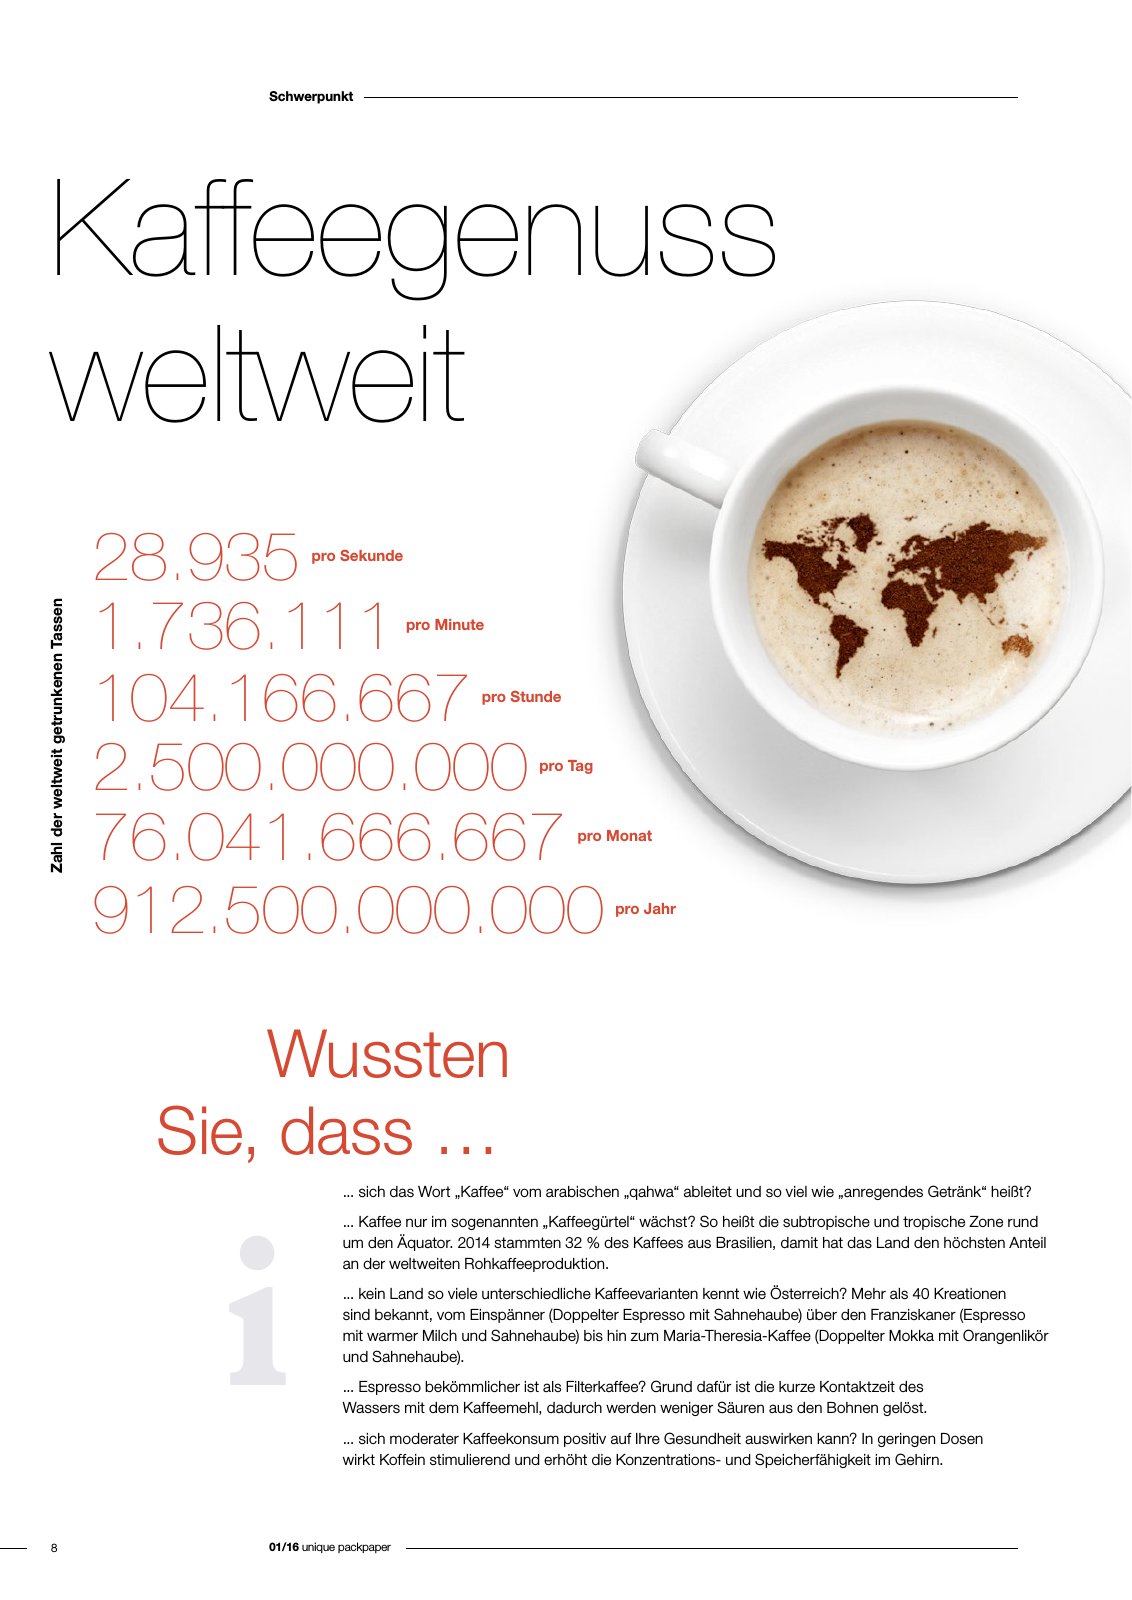 Vorschau upp 01/16 K+kavo DE Seite 8